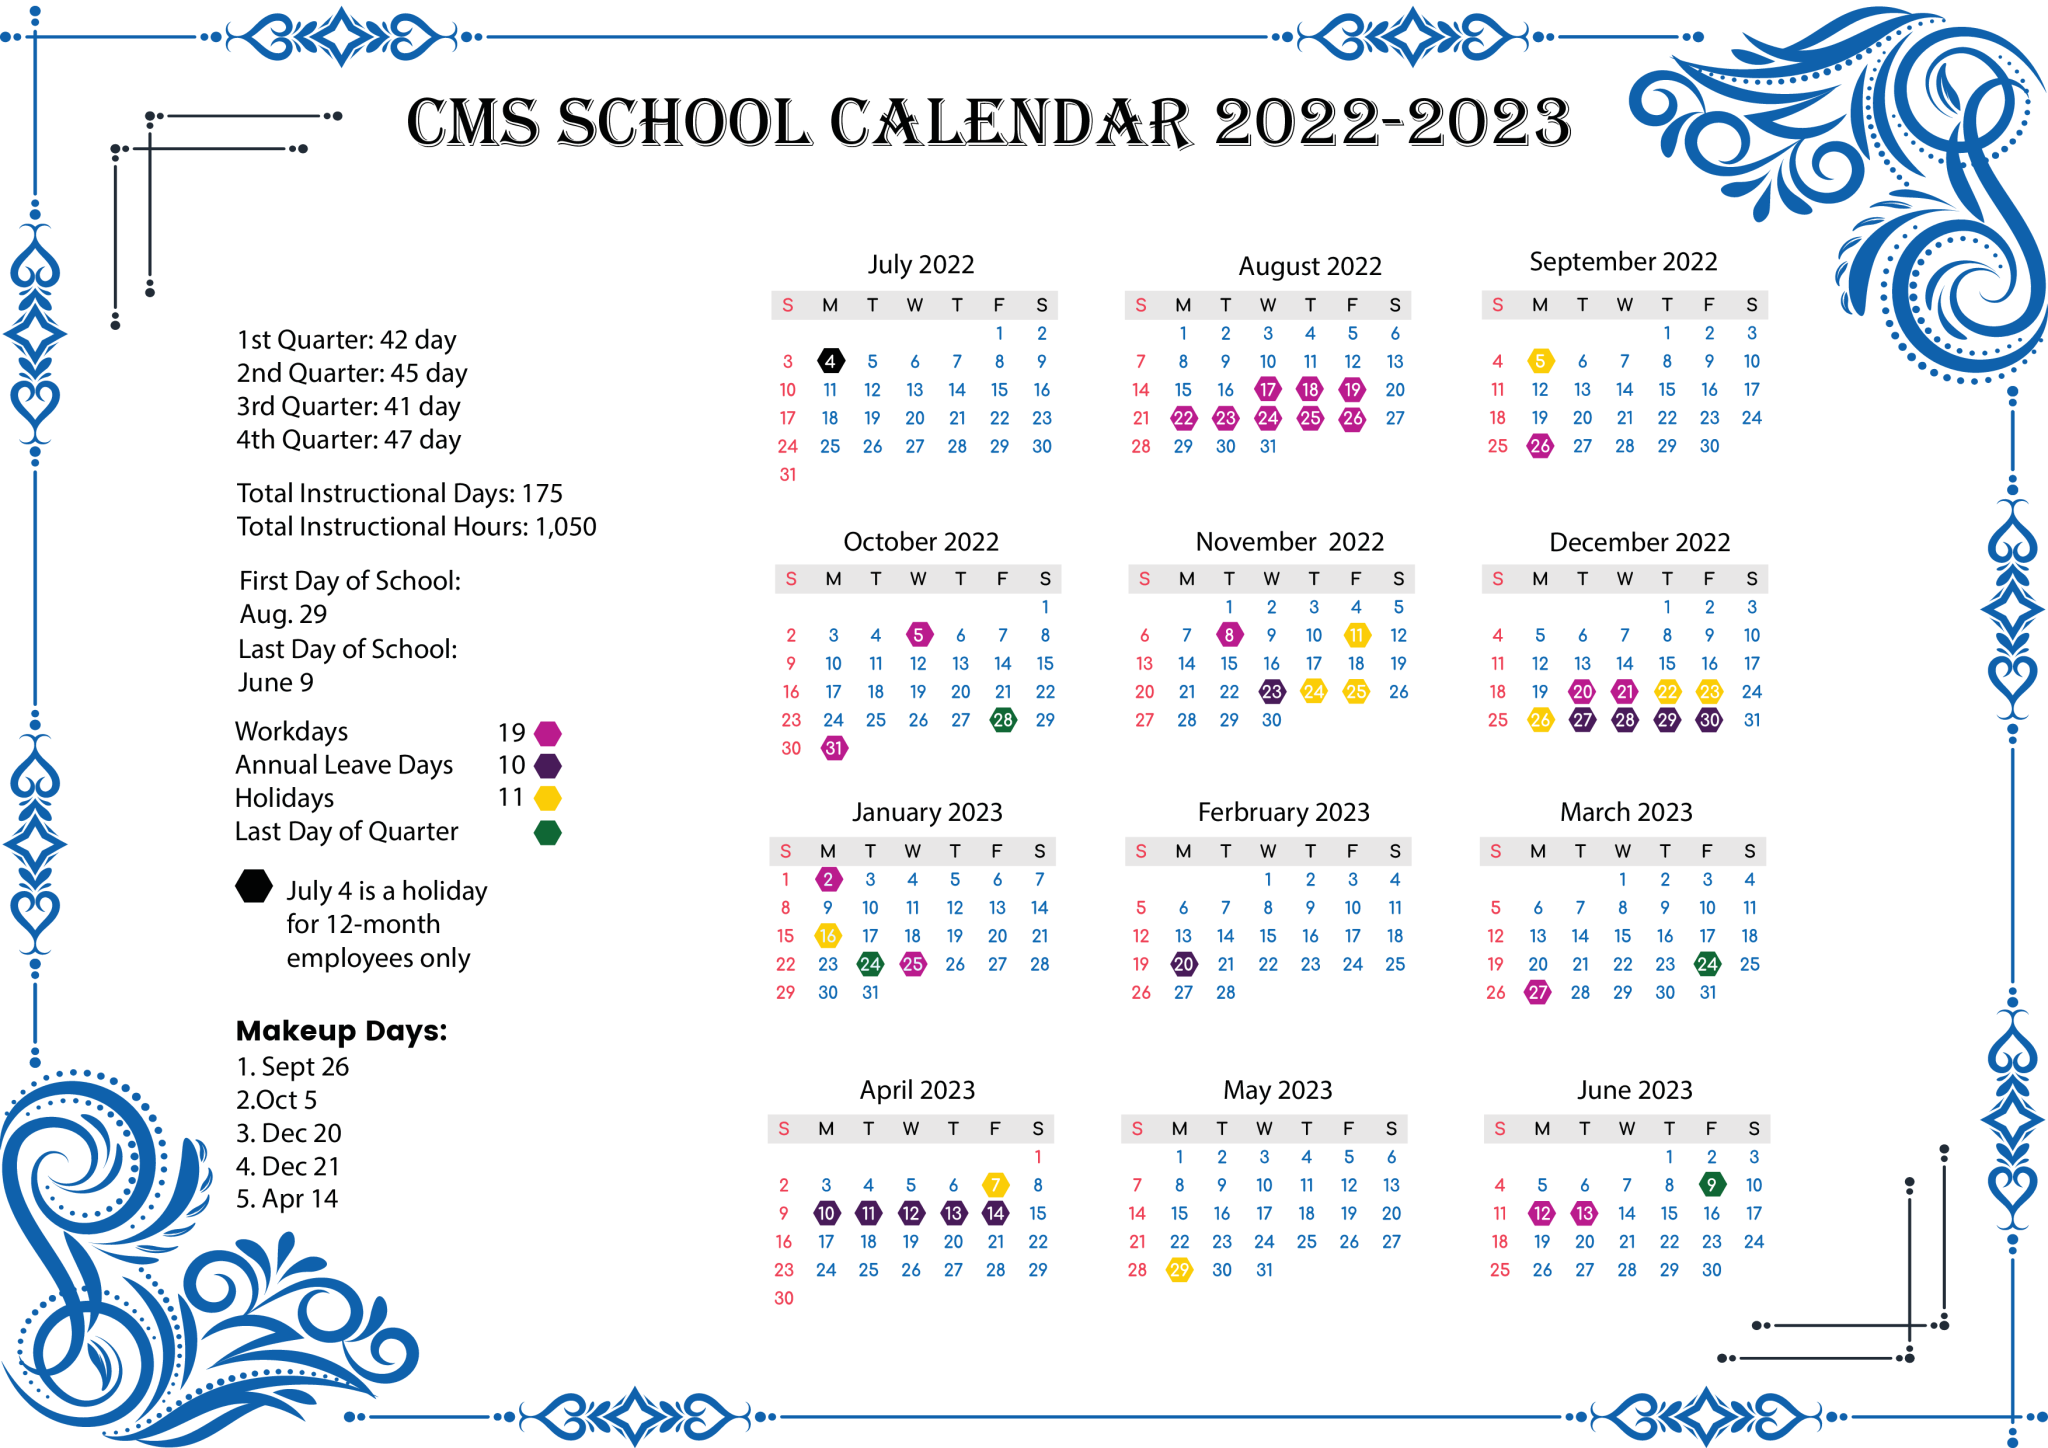 Cms School Calendar 2023 US School Calendar